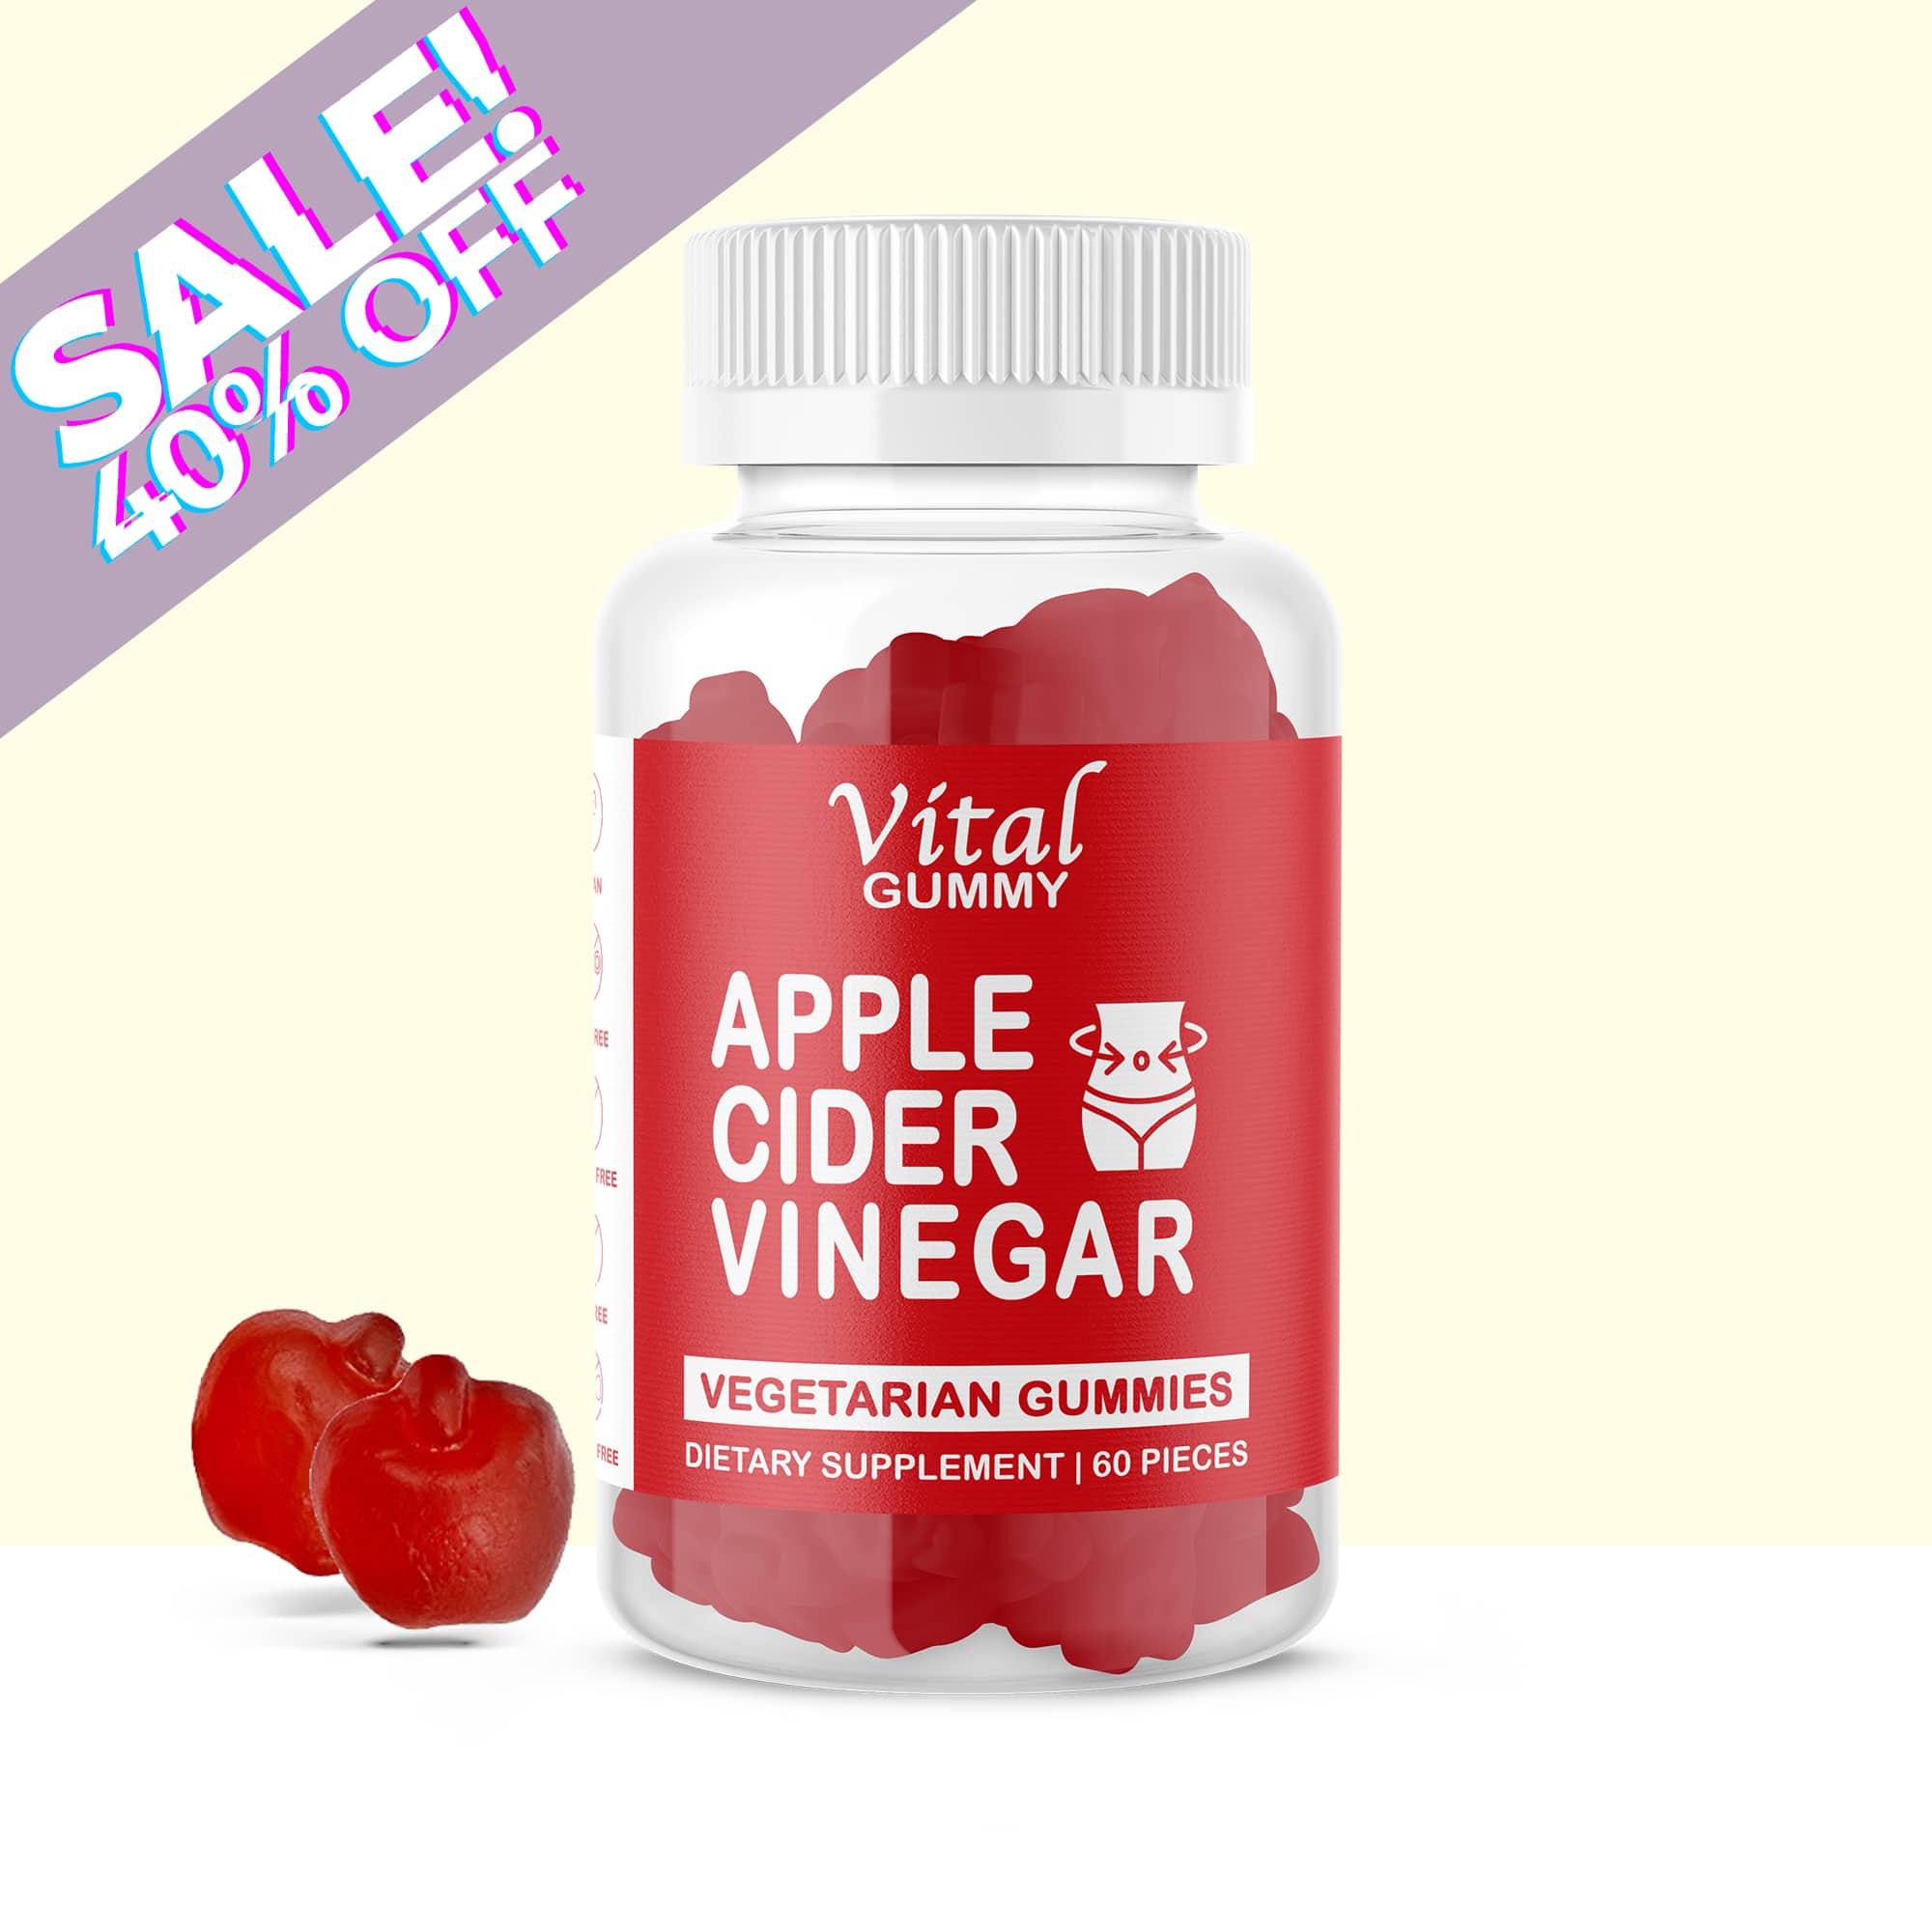 Apple Cider Vinegar Vital Gummy